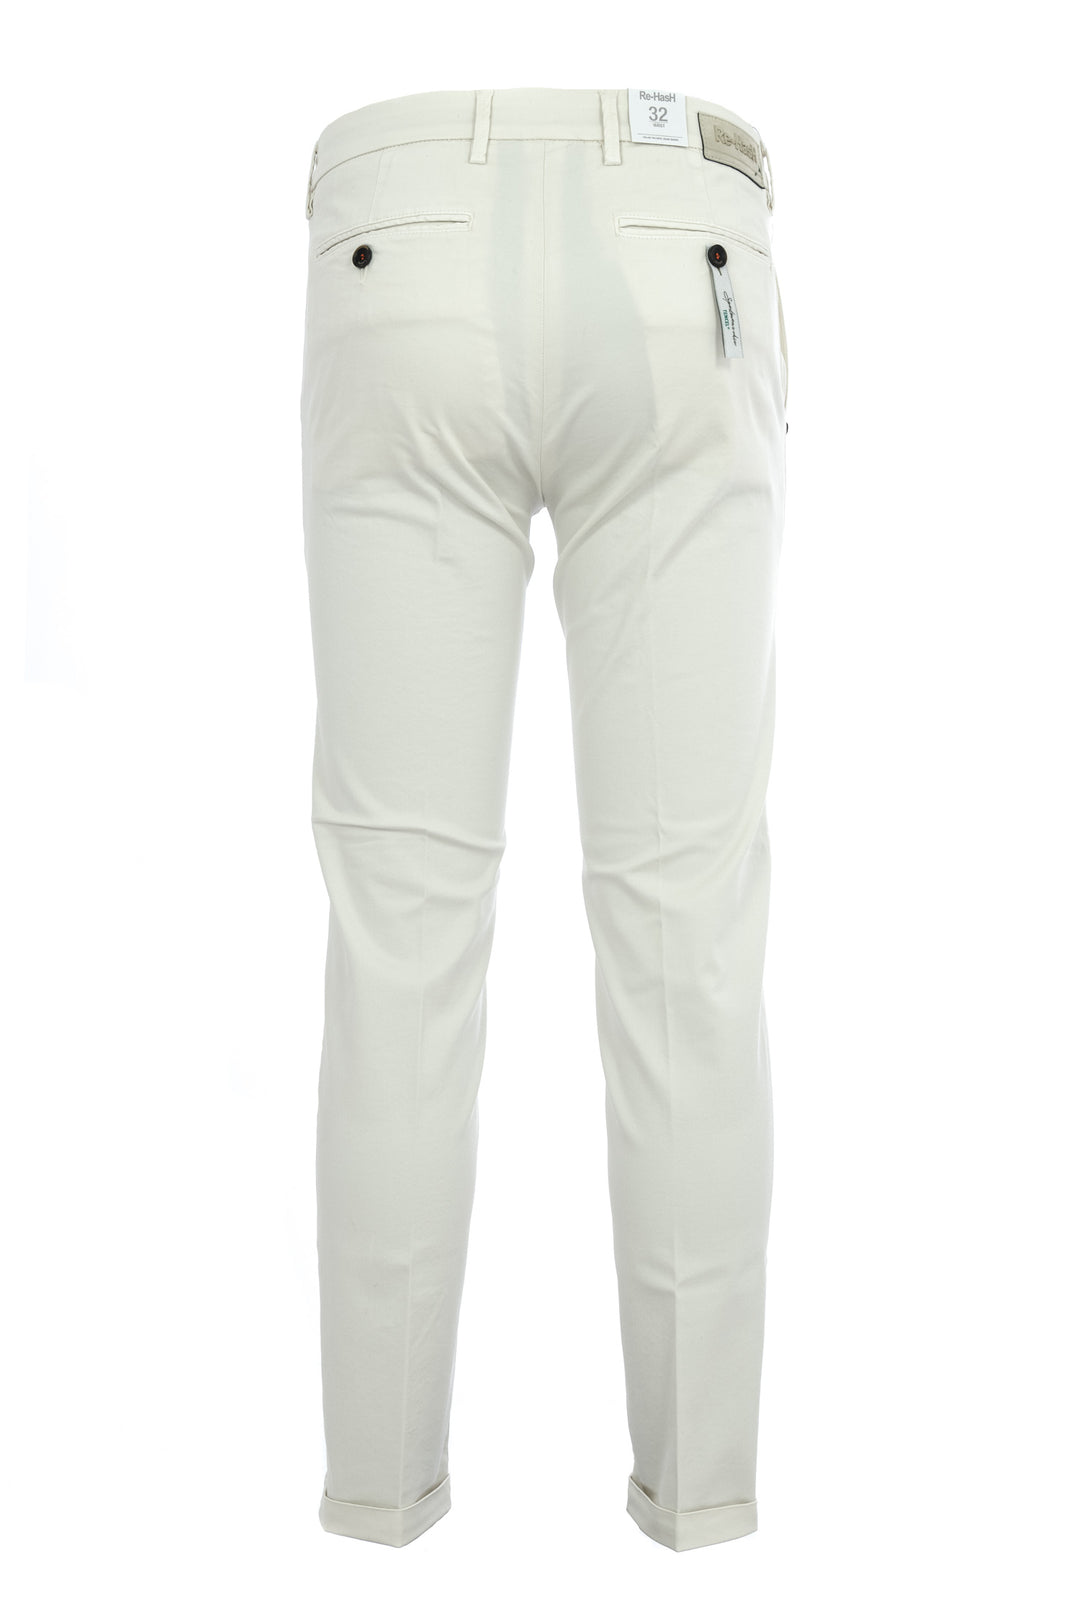 RE-HASH Pantalone chinos in tencel stretch bianco - Mancinelli 1954